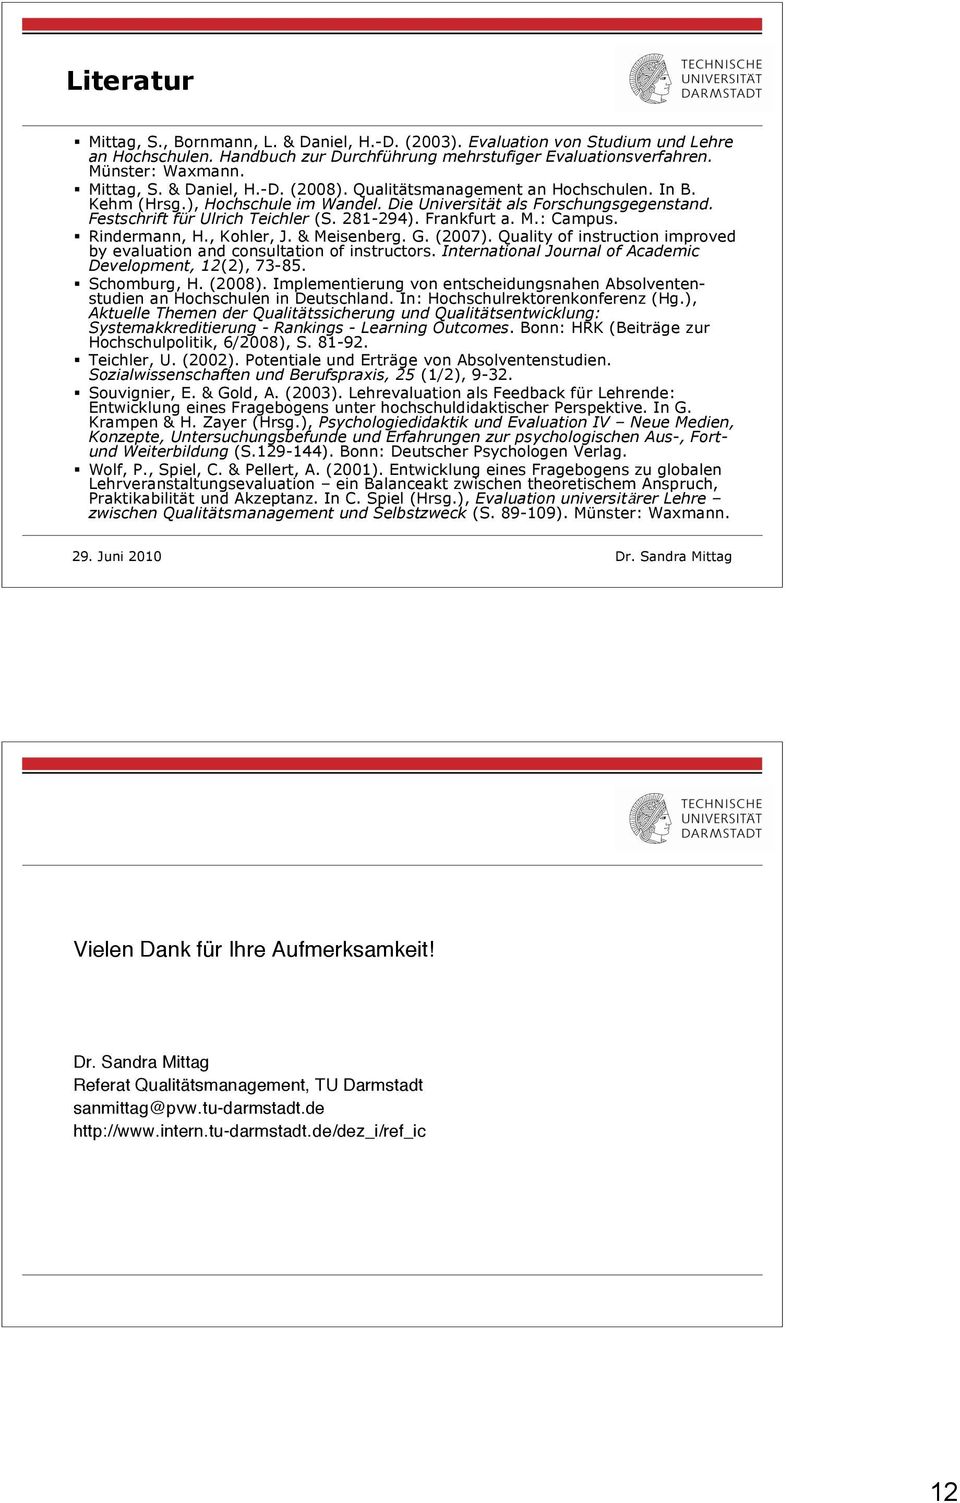 Rindermann, H., Kohler, J. & Meisenberg. G. (2007). Quality of instruction improved by evaluation and consultation of instructors. International Journal of Academic Development, 12(2), 73-85.